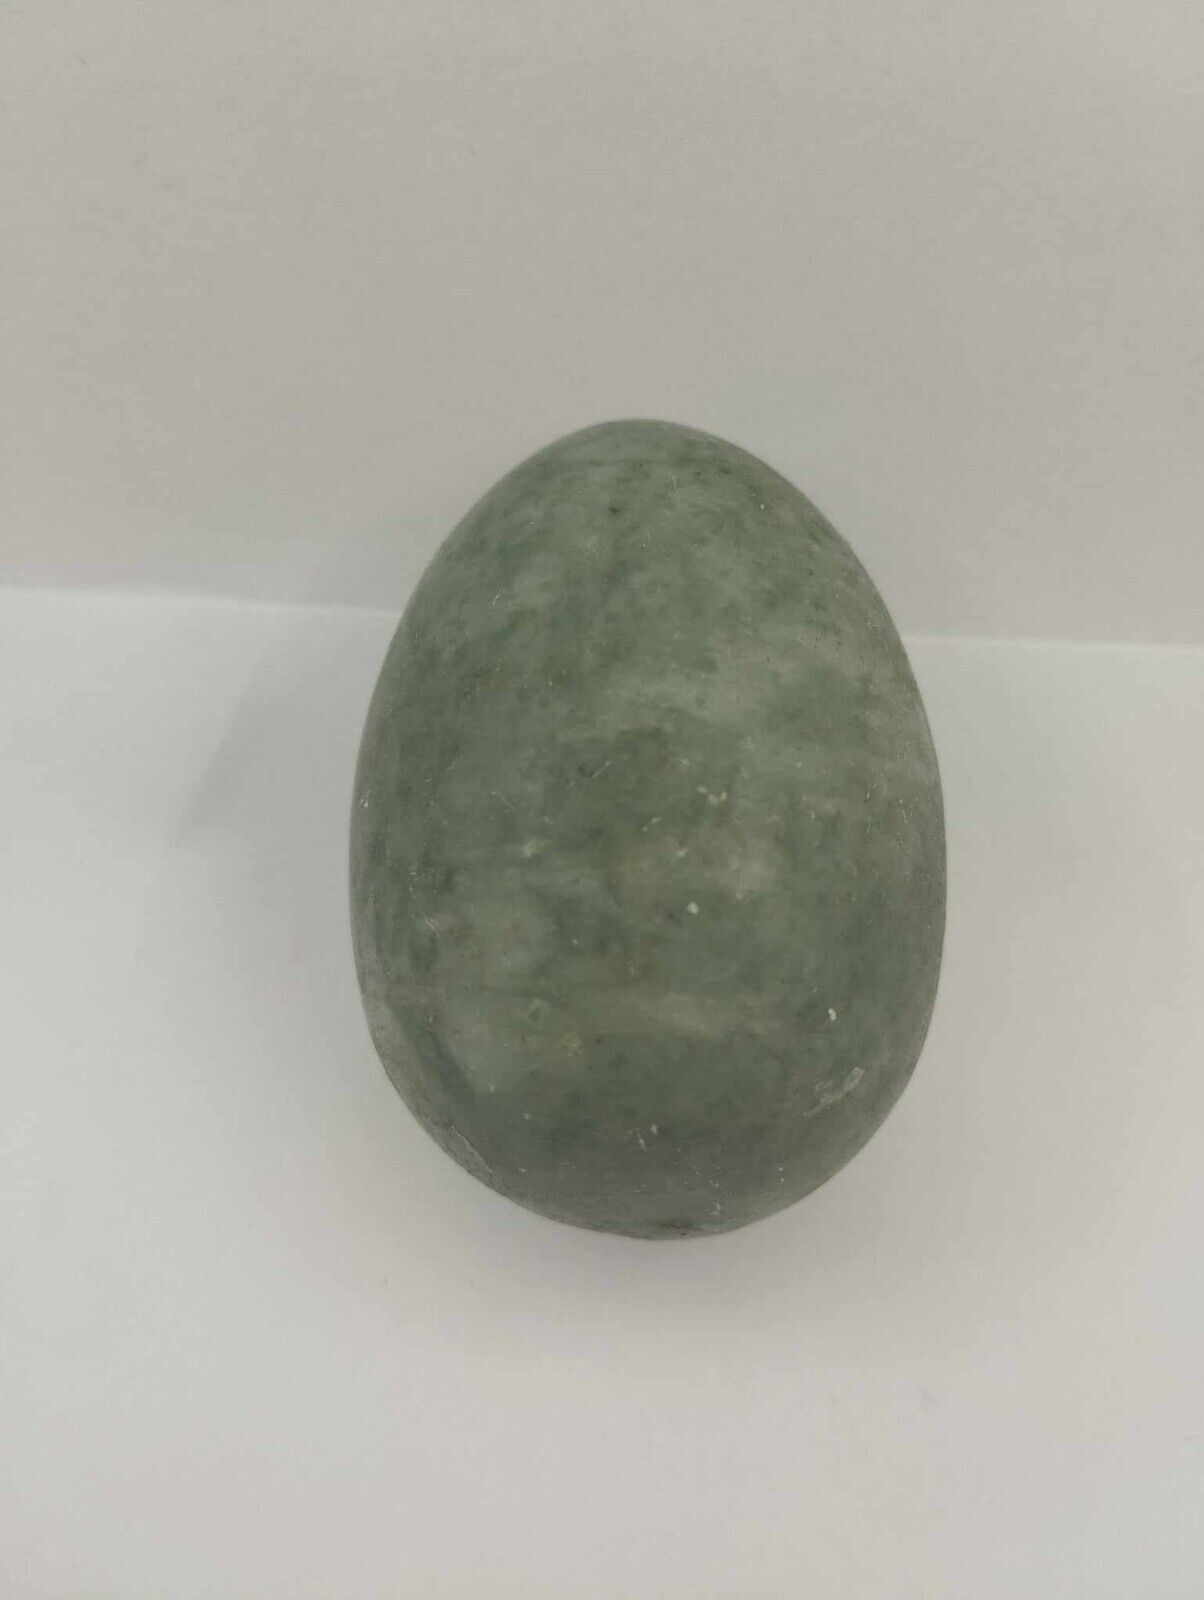 Vintage green stone egg shaped home decor